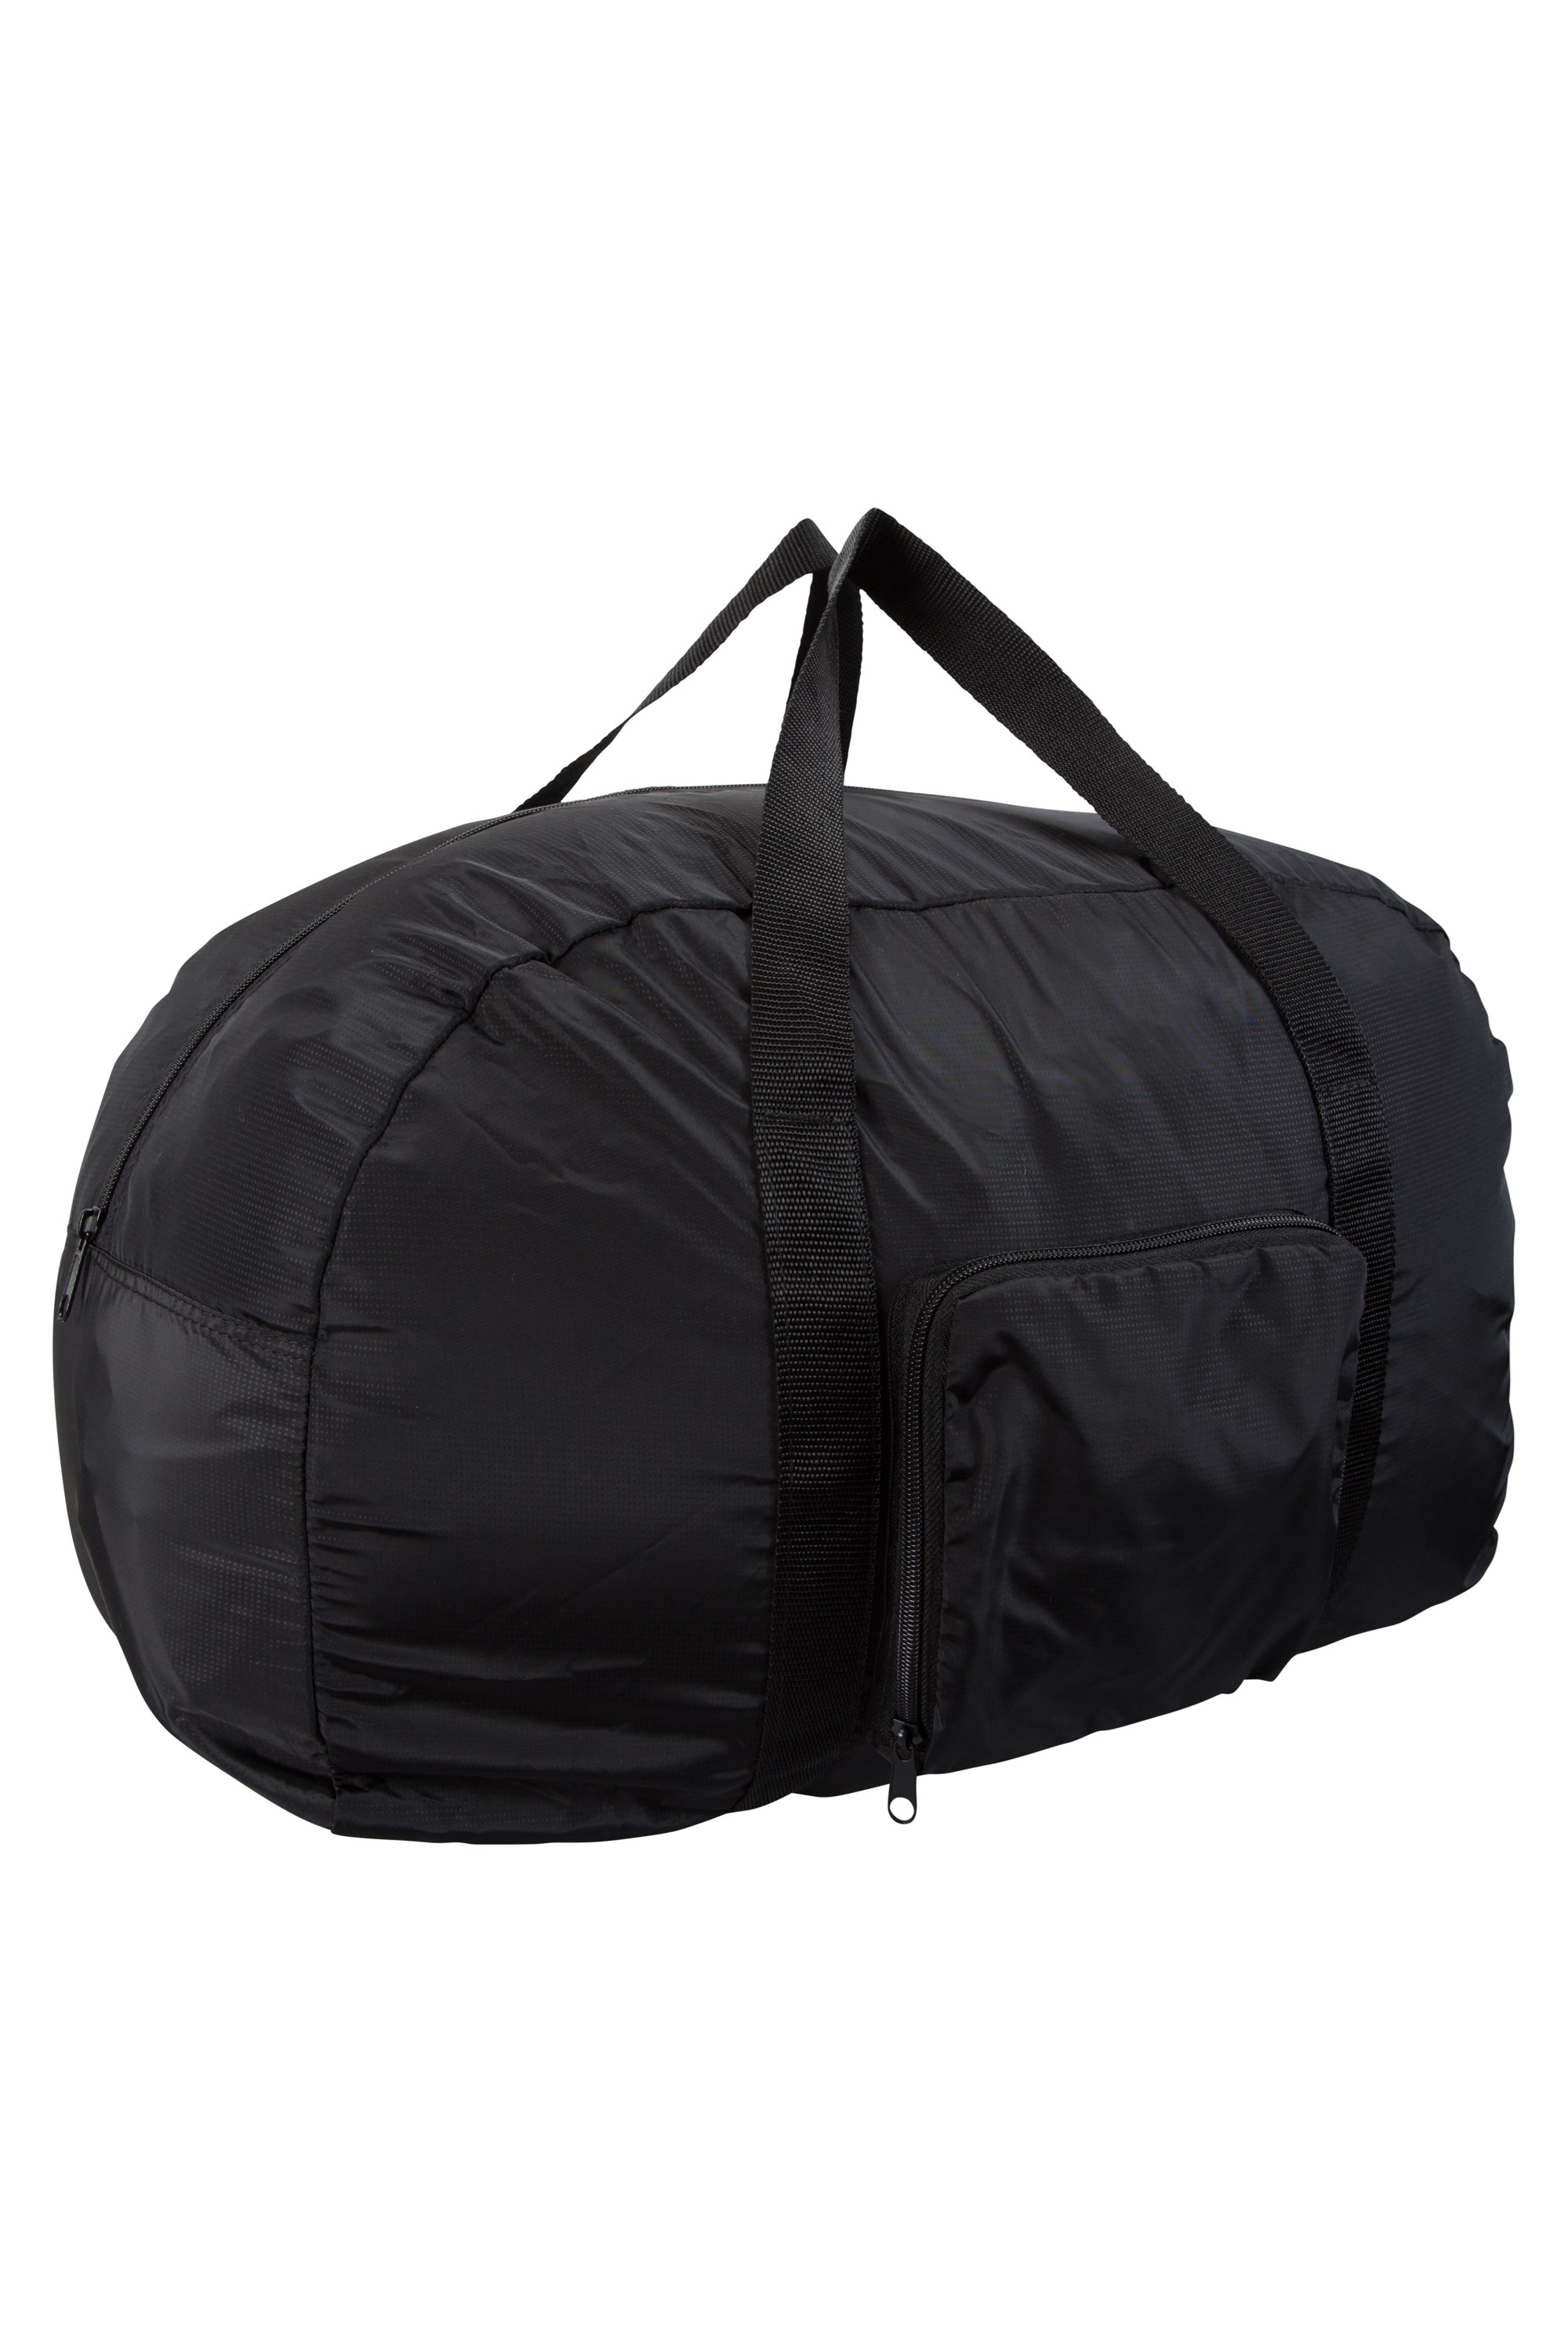 Cabin Sized Packaway Holdall - 40l - Black